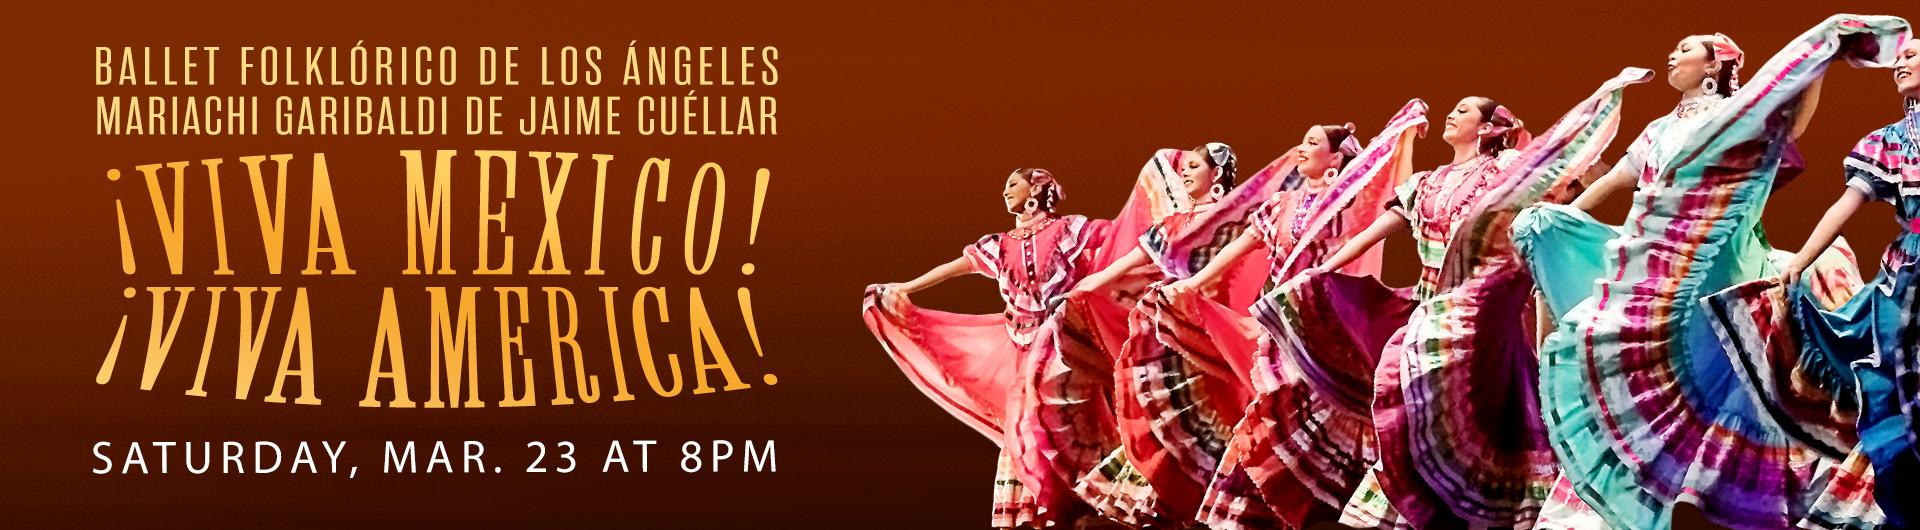 Members of Ballet Folklorico dancing on stage next to the headline ¡Viva Mexico! ¡Viva America!